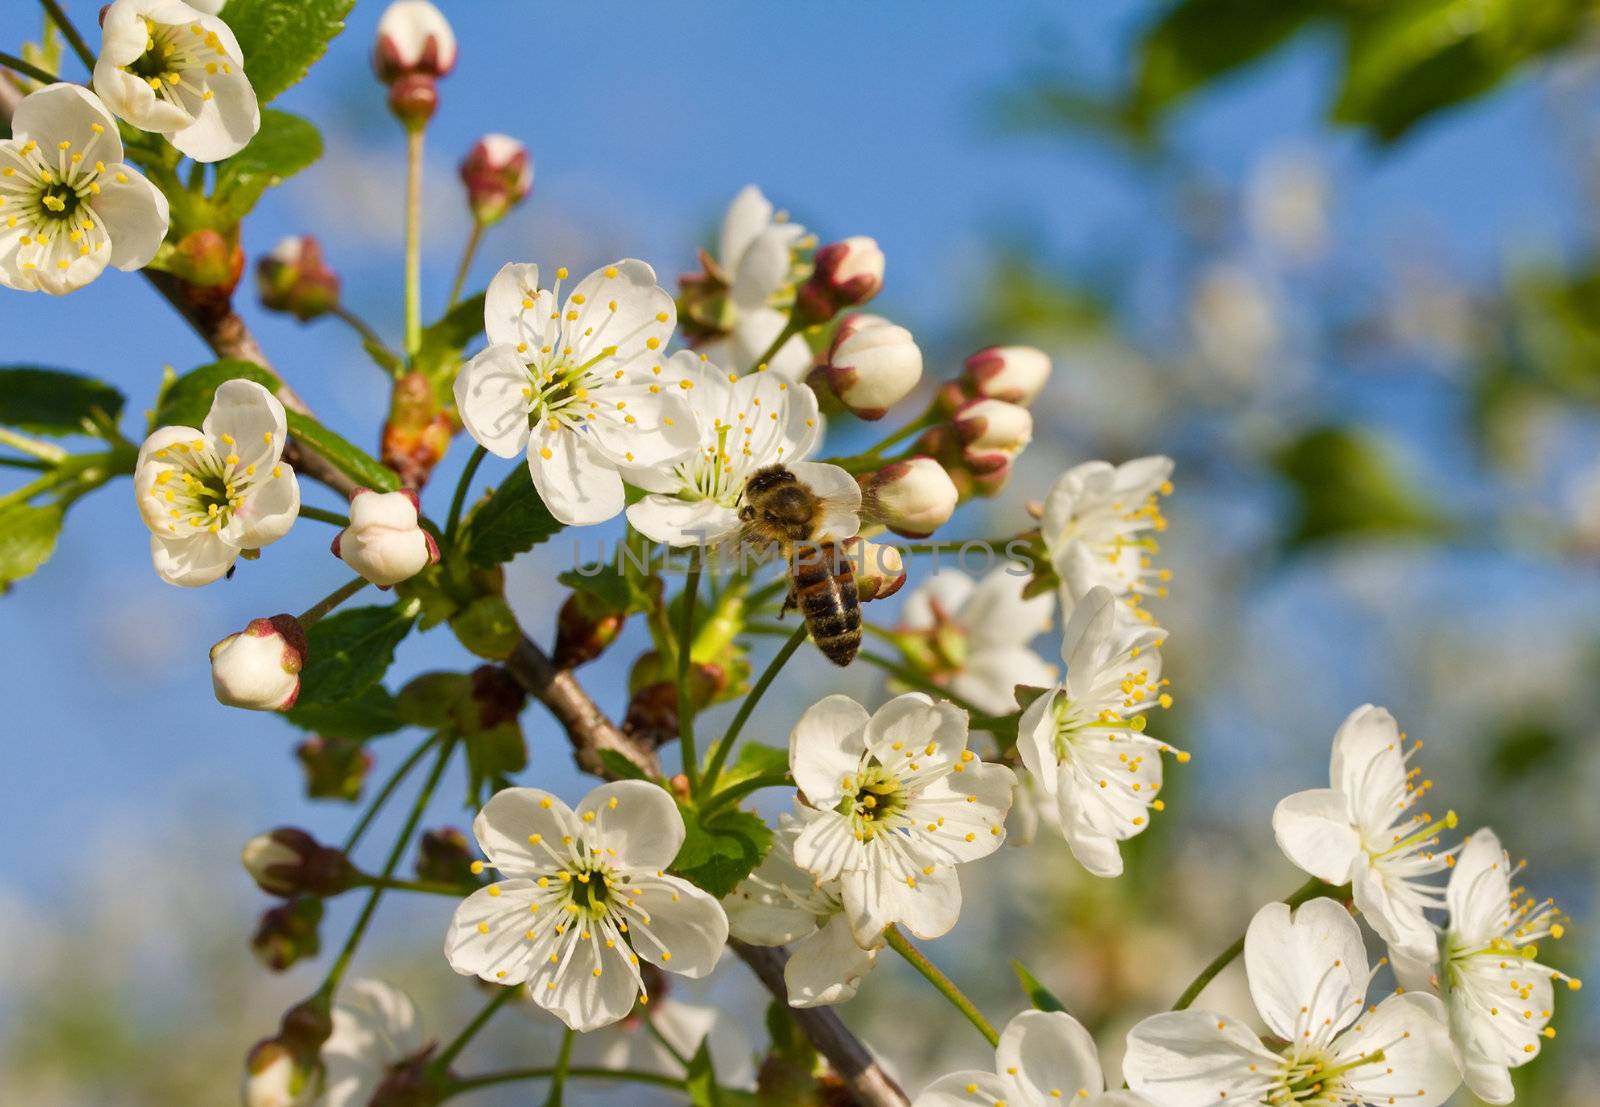 honeybee pollinating flowers of cherry